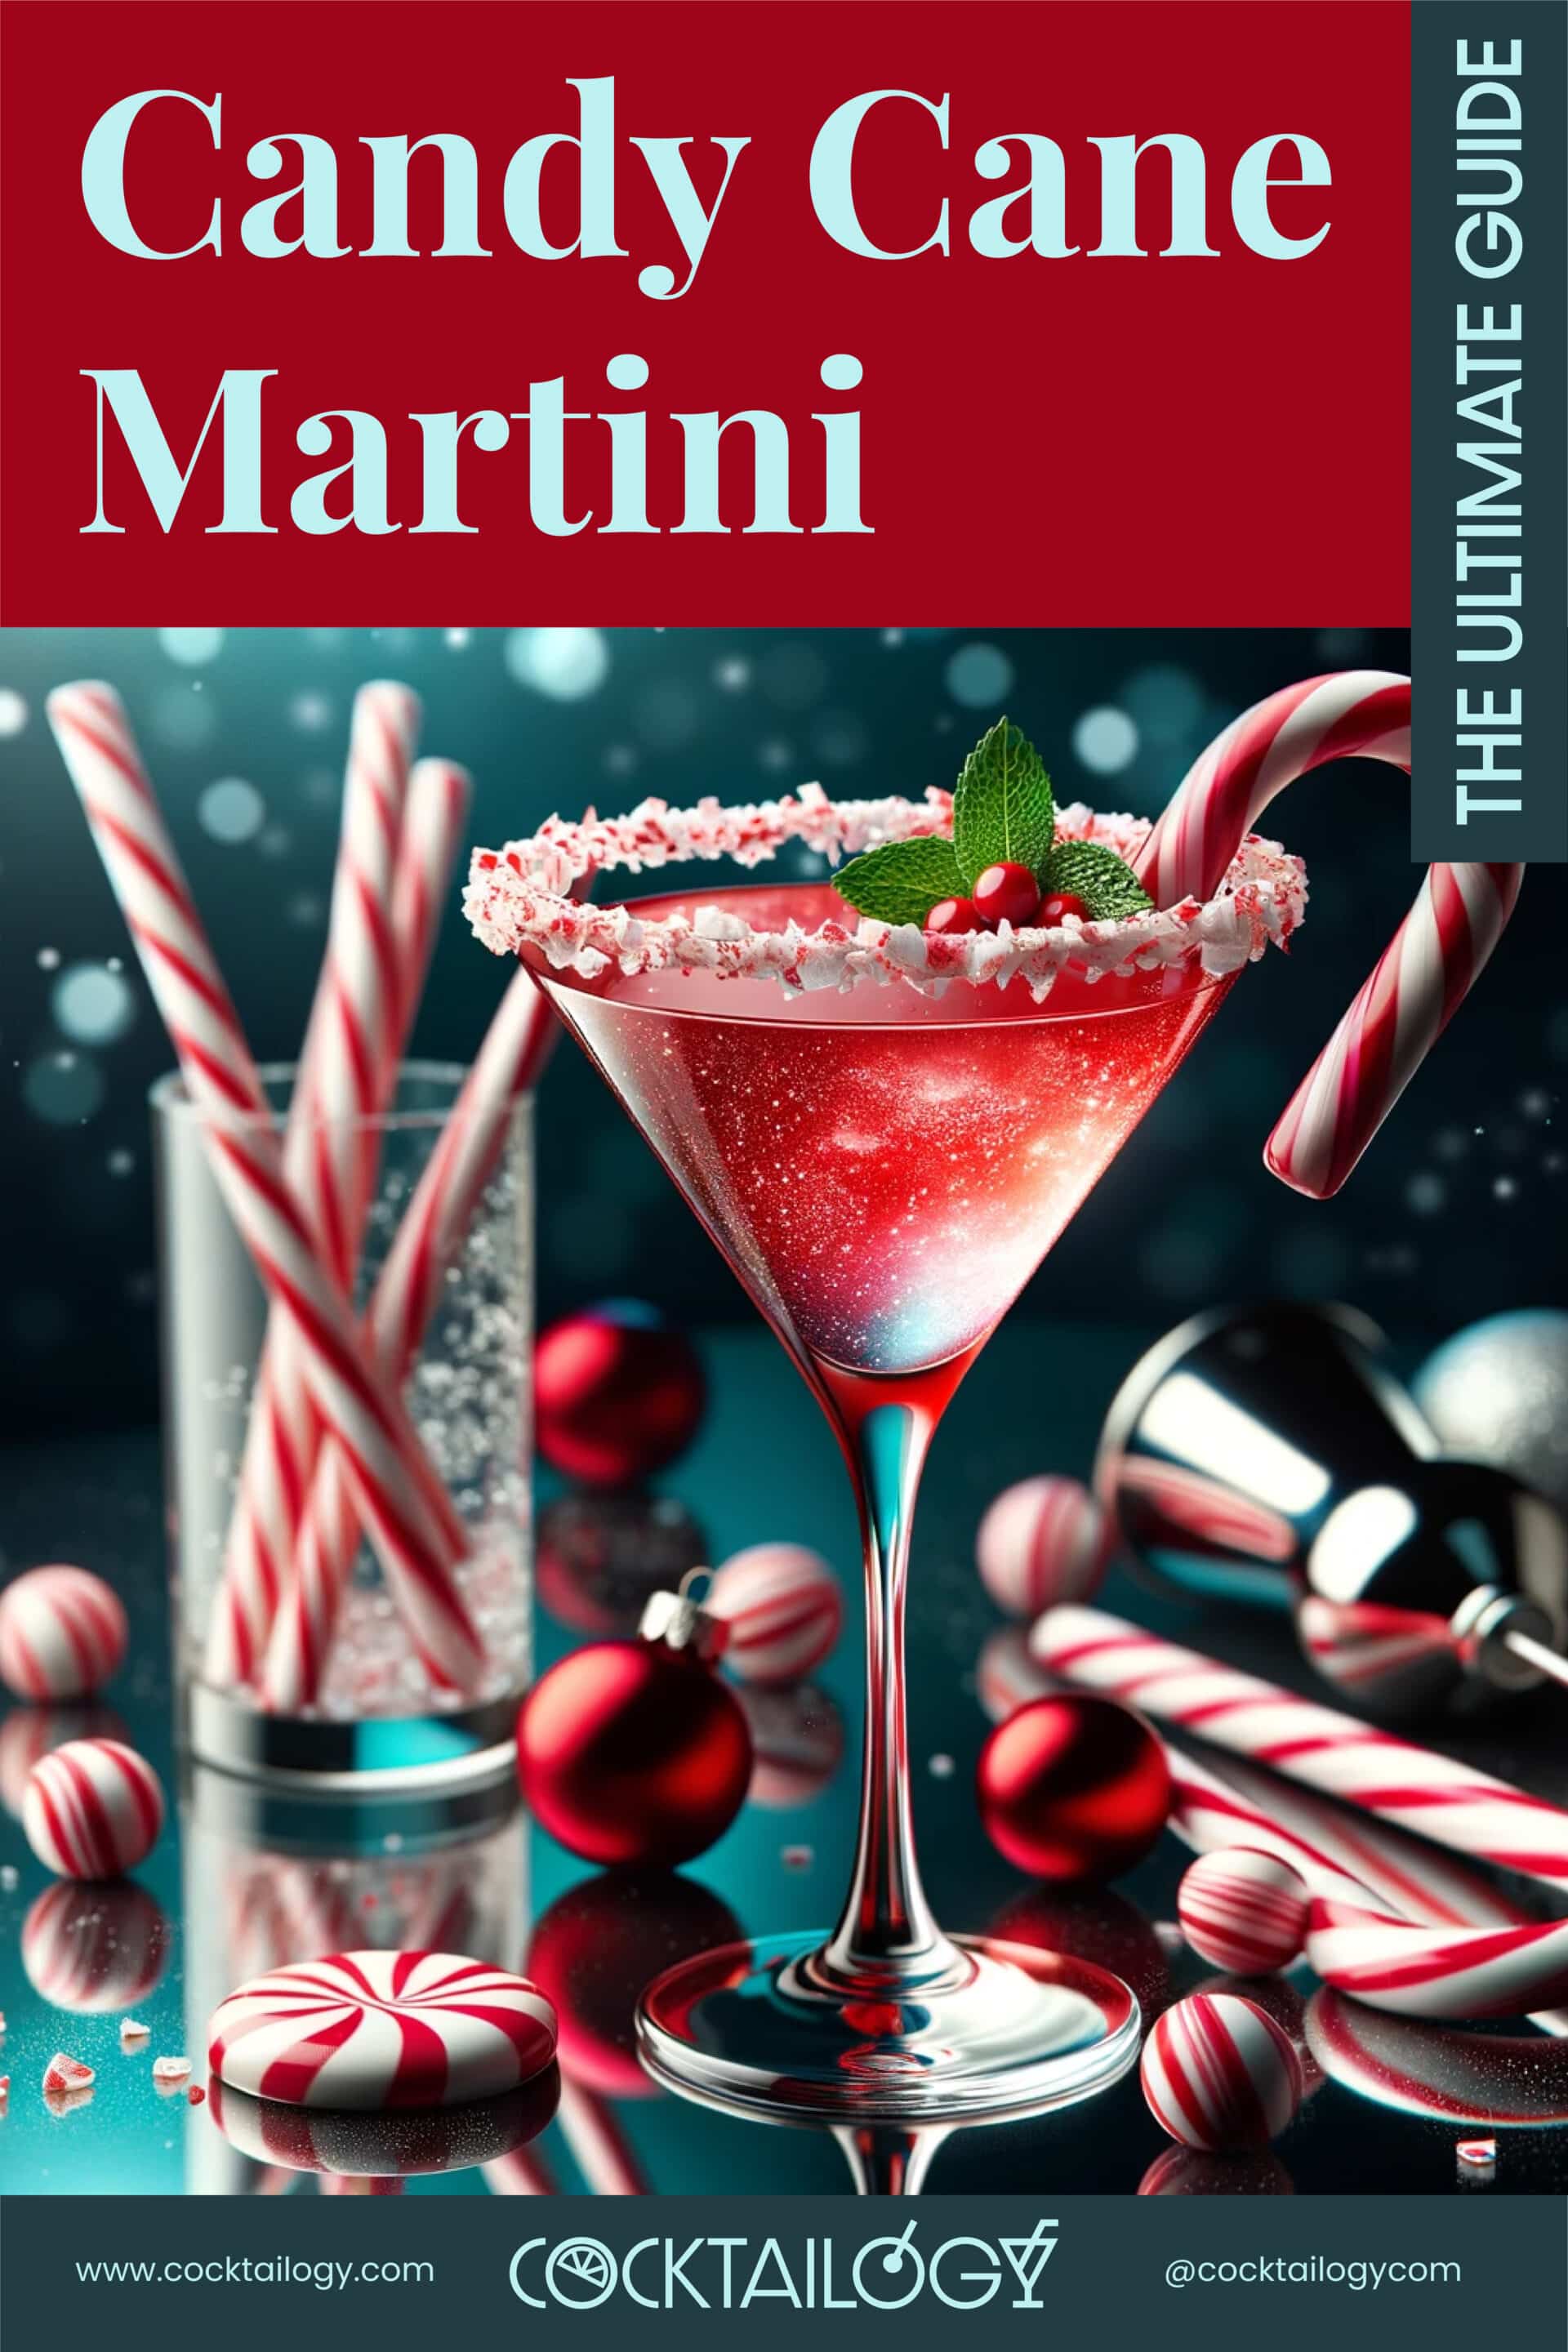 Candy Cane Martini Guide